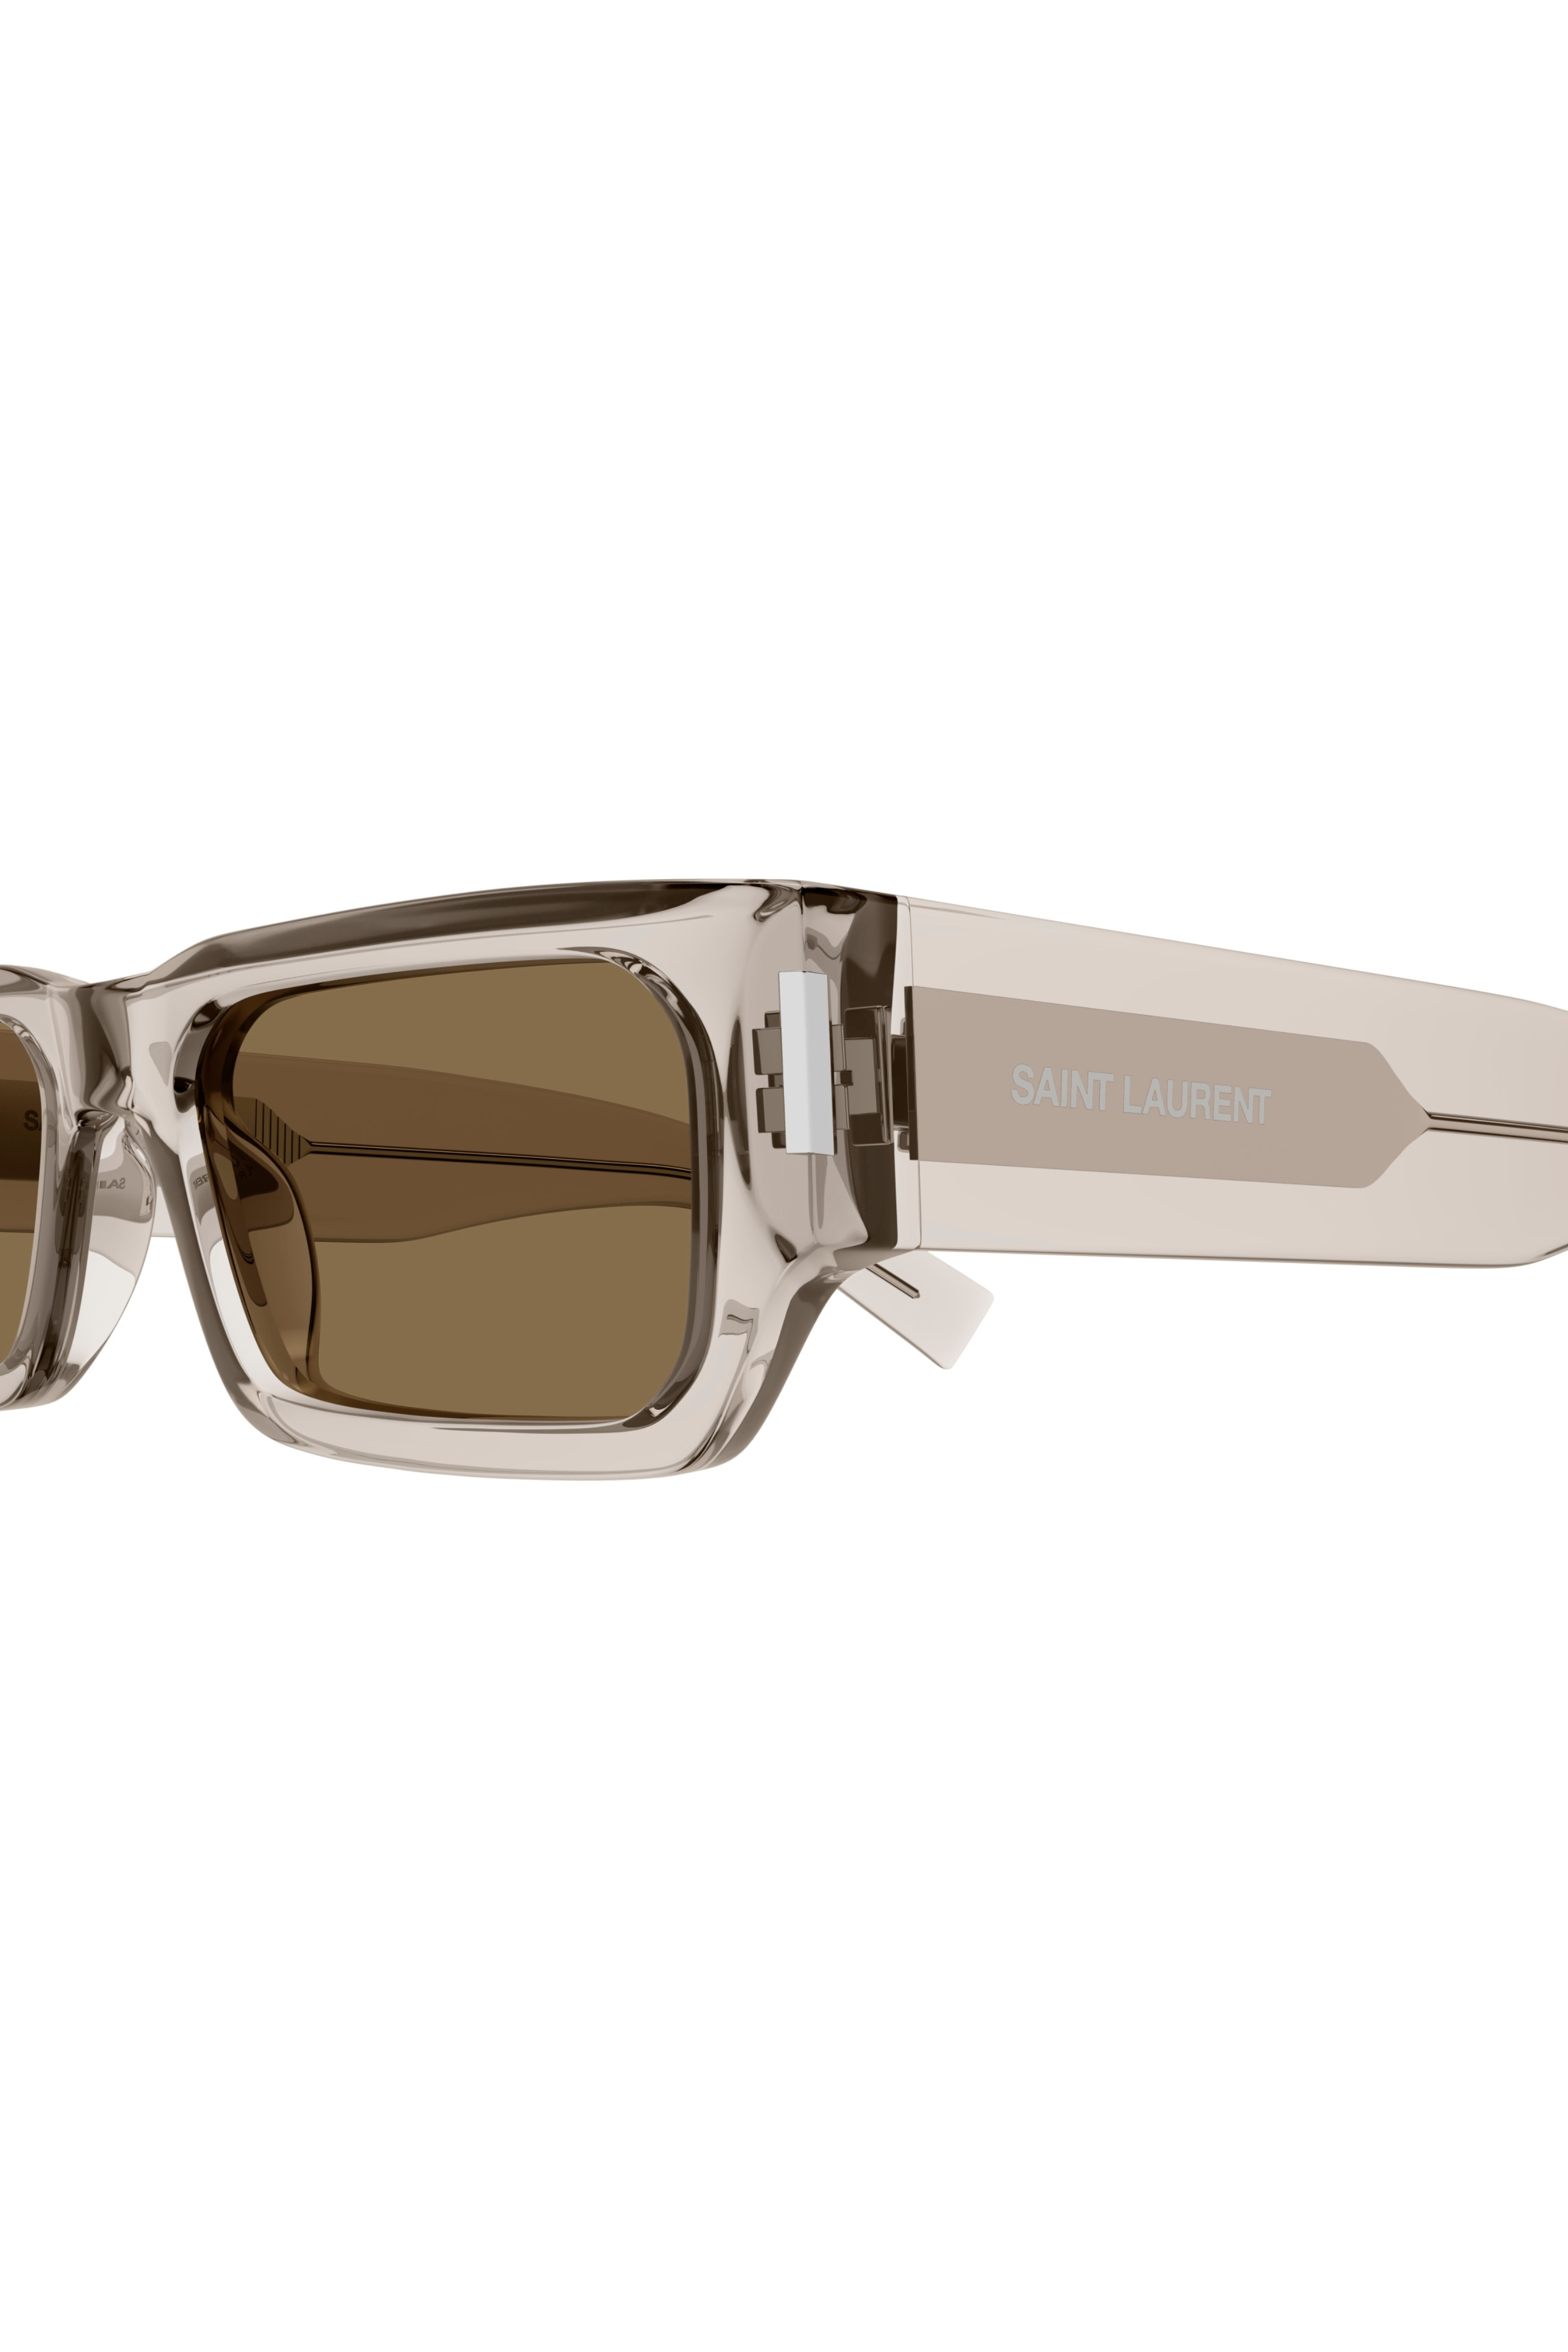 SAINT LAURENT Unisex Rectangle Frame Sunglasses